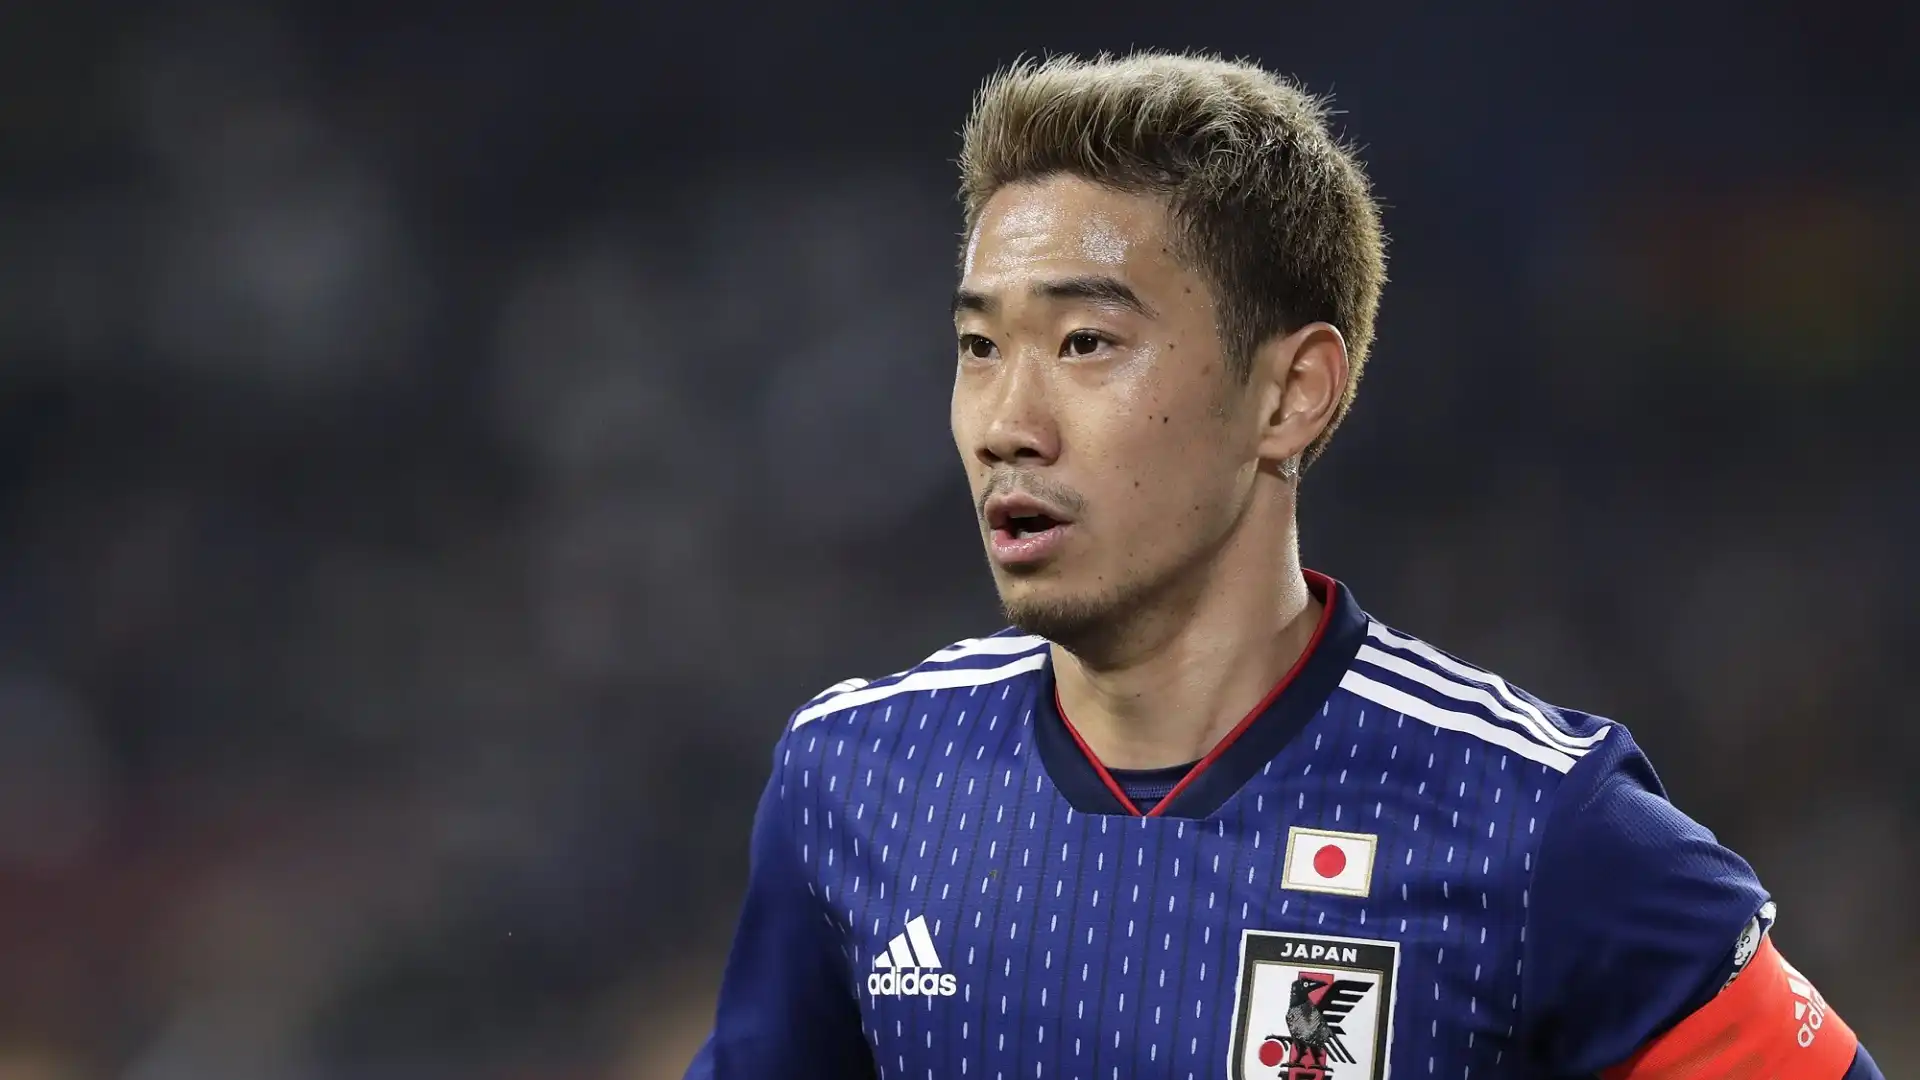 Shinji Kagawa (calcio): guadagni stimati 6,8 milioni di dollari